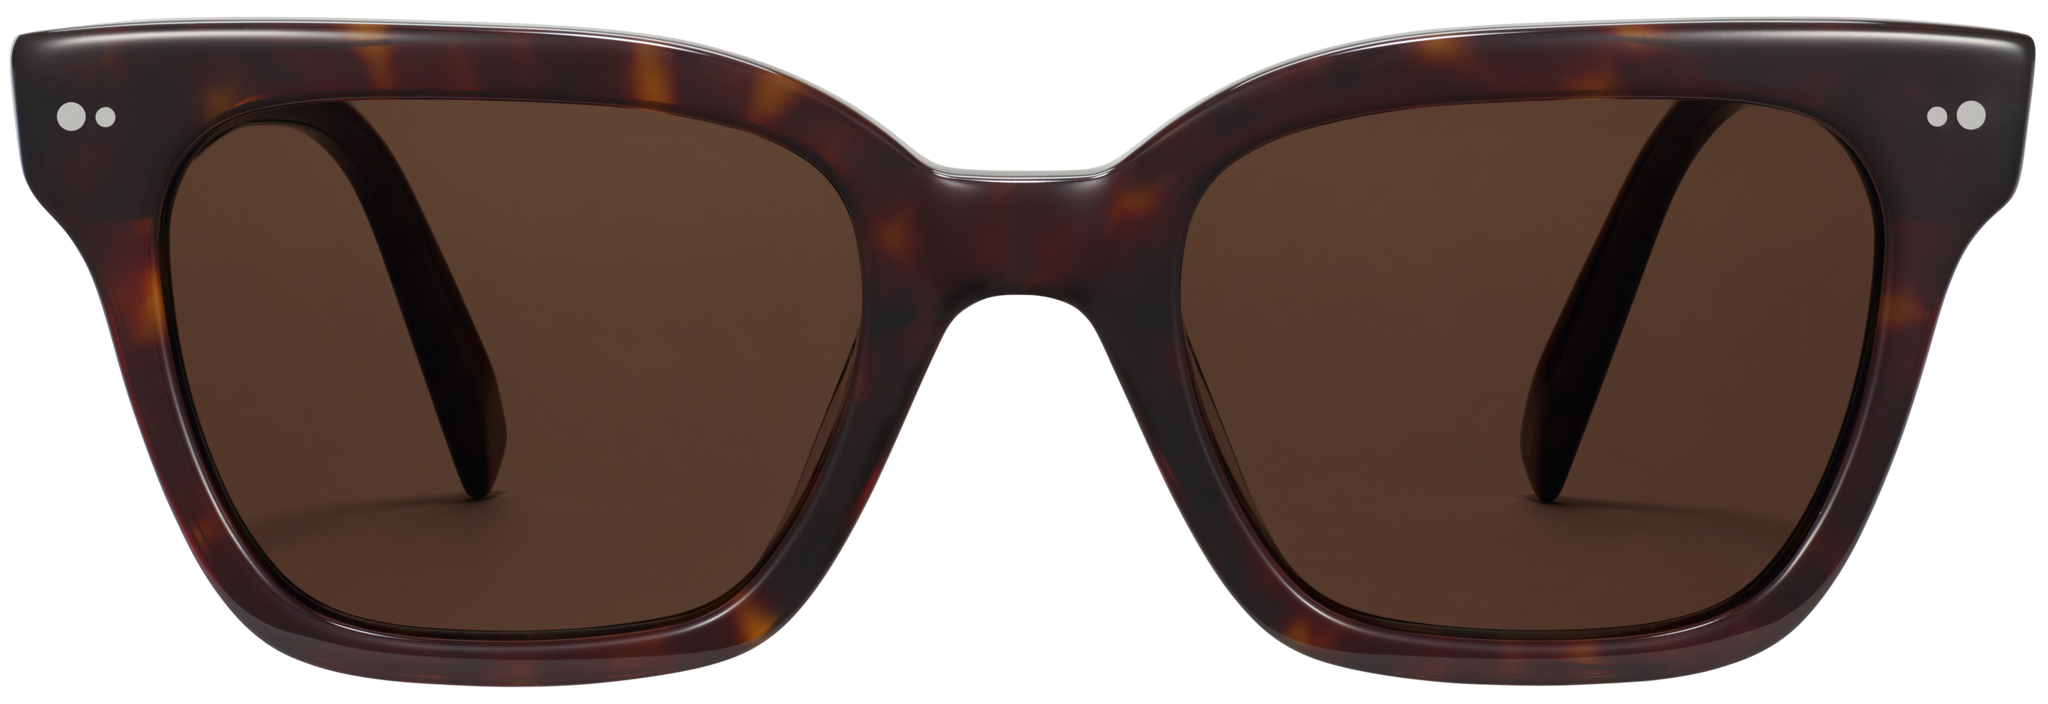 Beale Sunglasses in Cognac Tortoise | Warby Parker